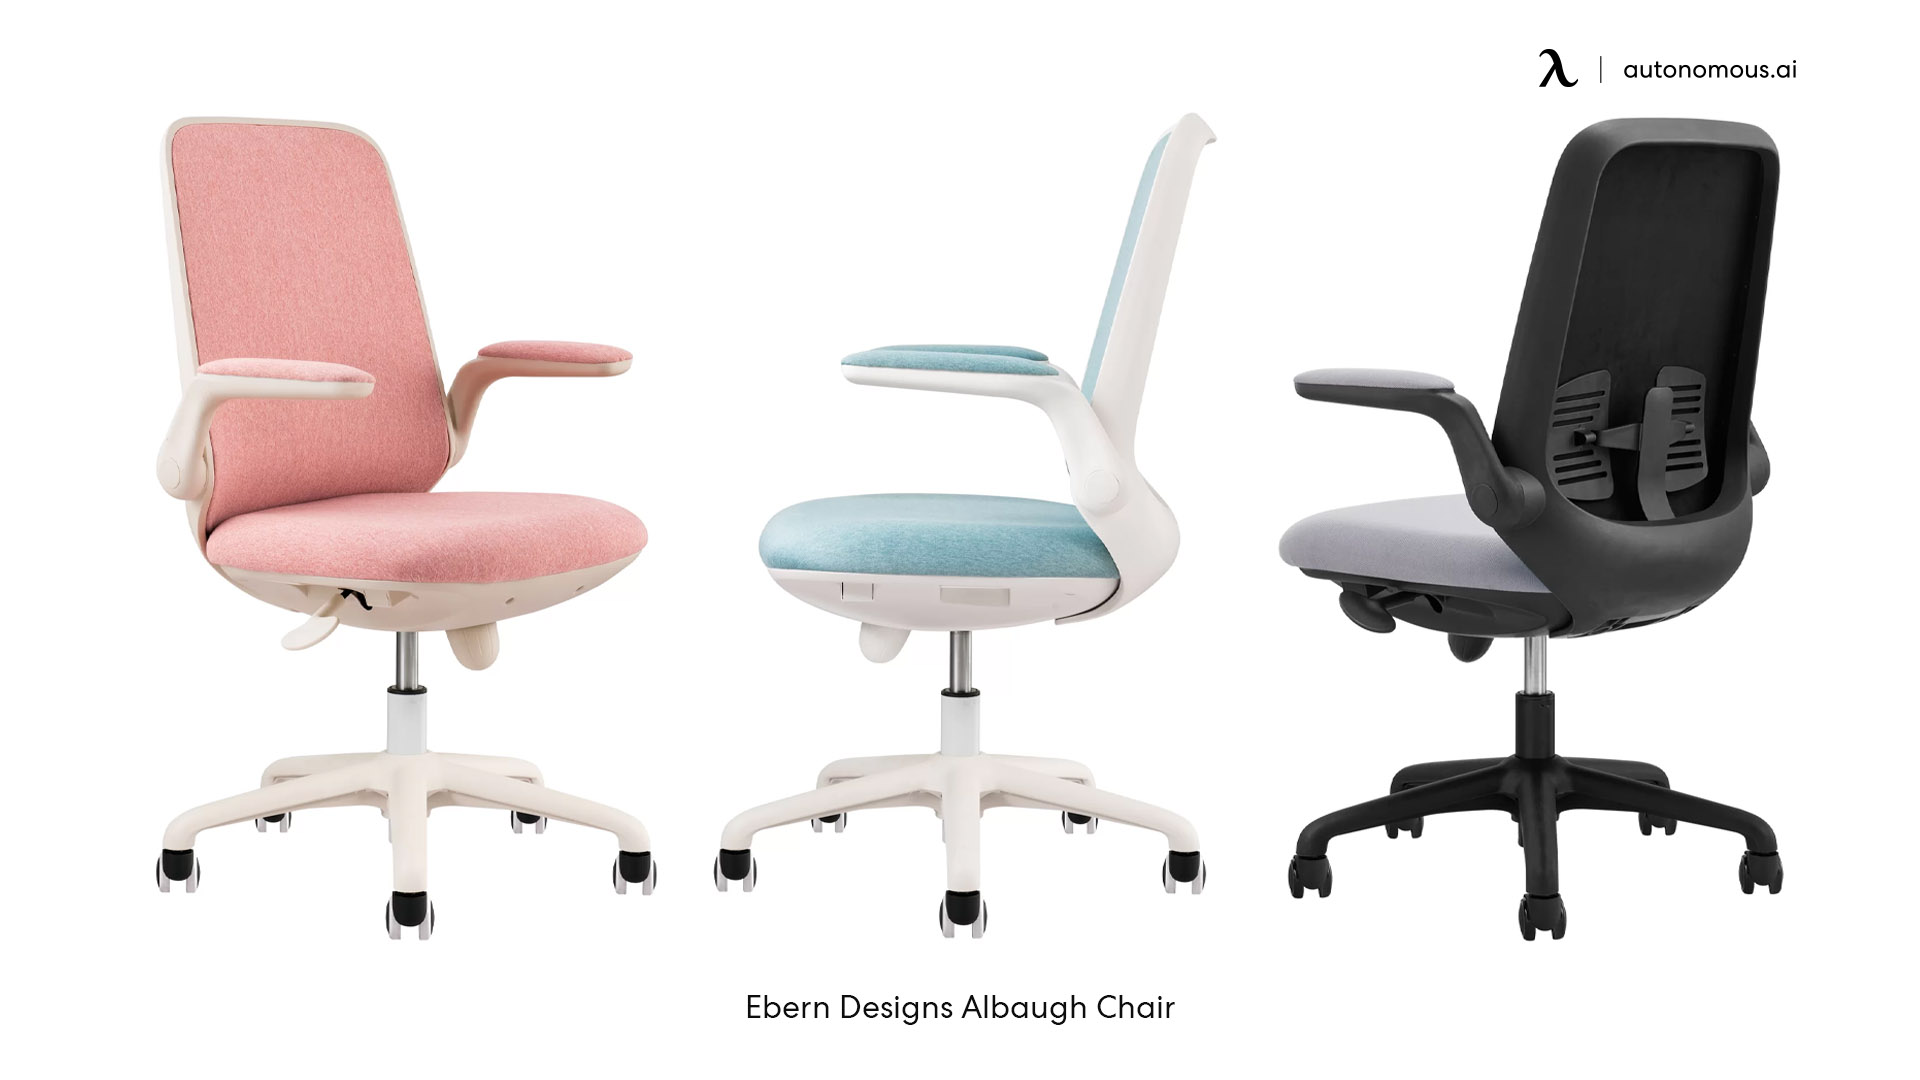 Ebern Designs Albaugh study chair for kids